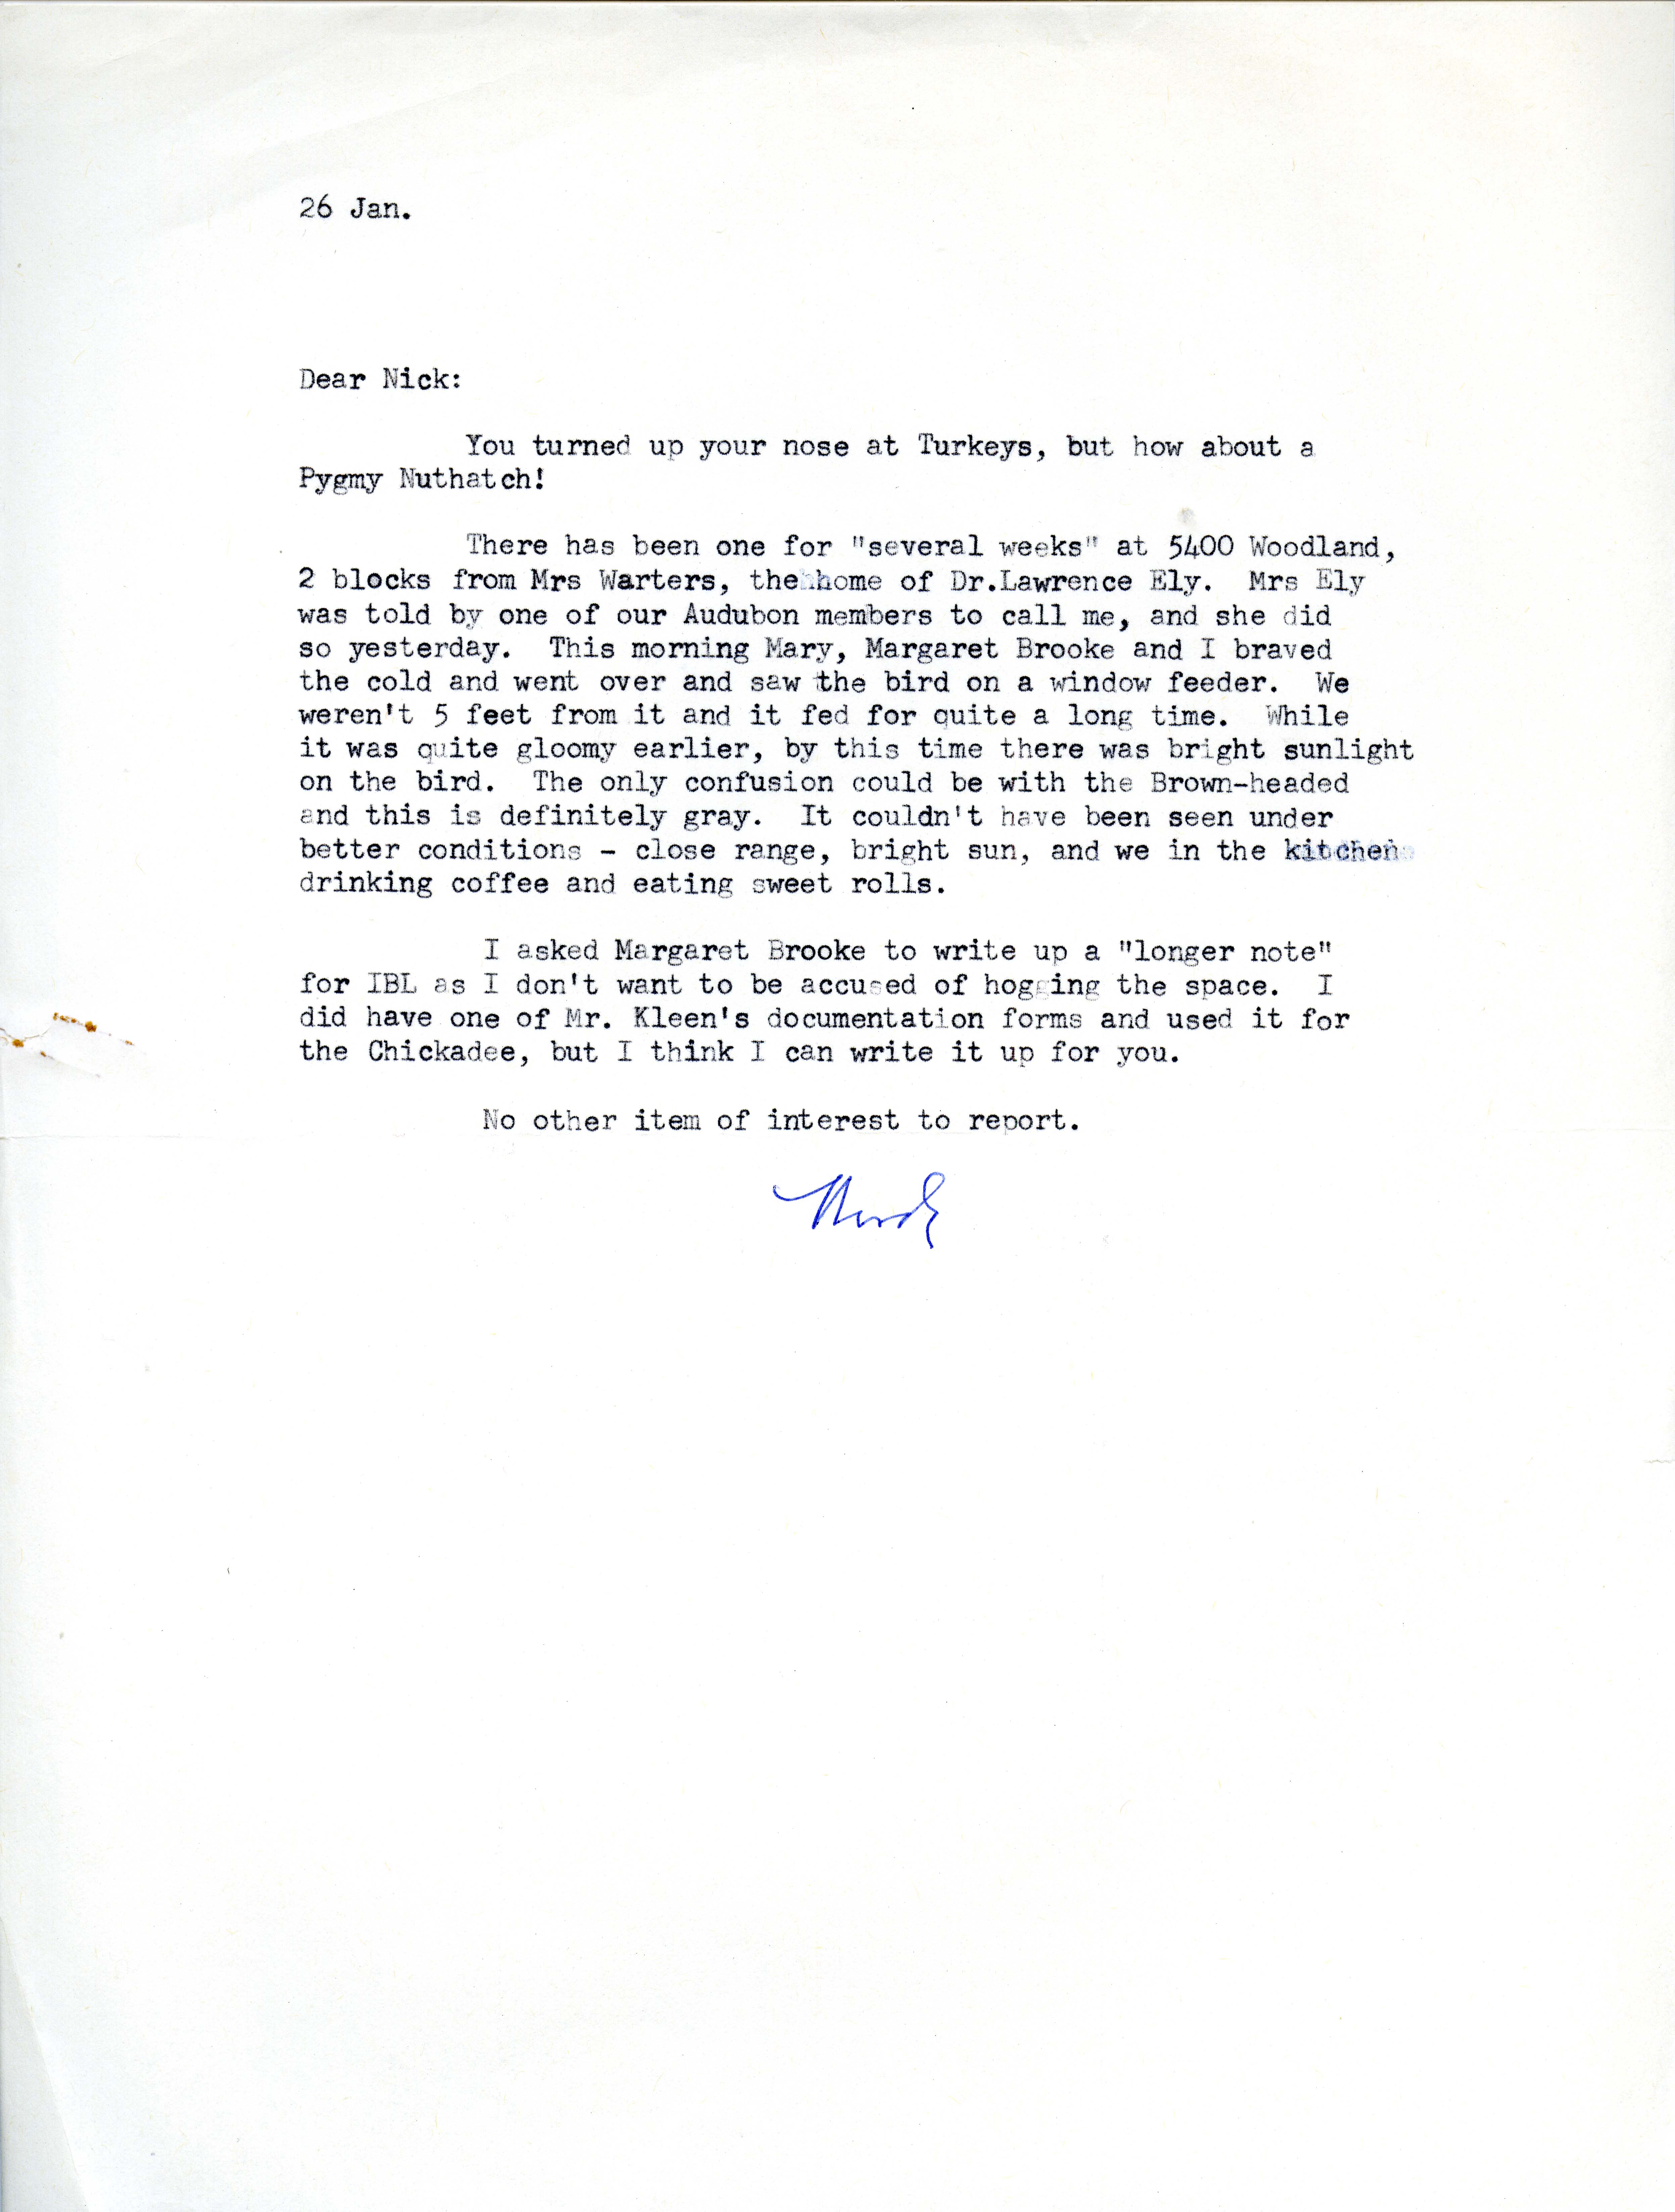 Woodward H. Brown letter to Nicholas S. Halmi regarding bird sighting, January 26, 1977 